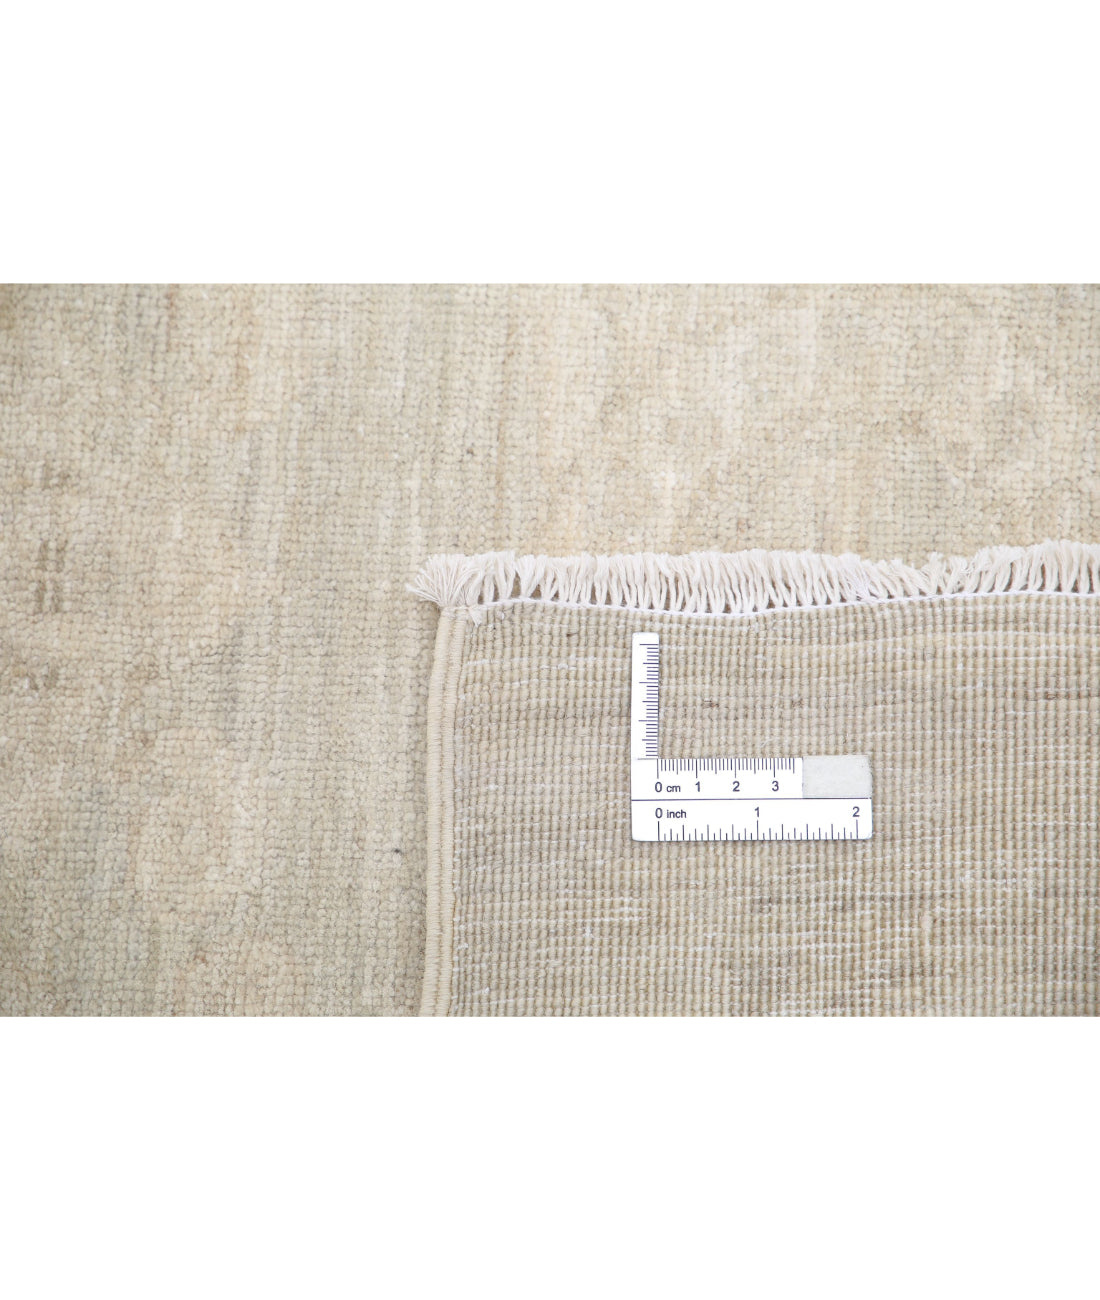 Serenity-hand-knotted-tabriz-wool-rug-5013280-9.jpg